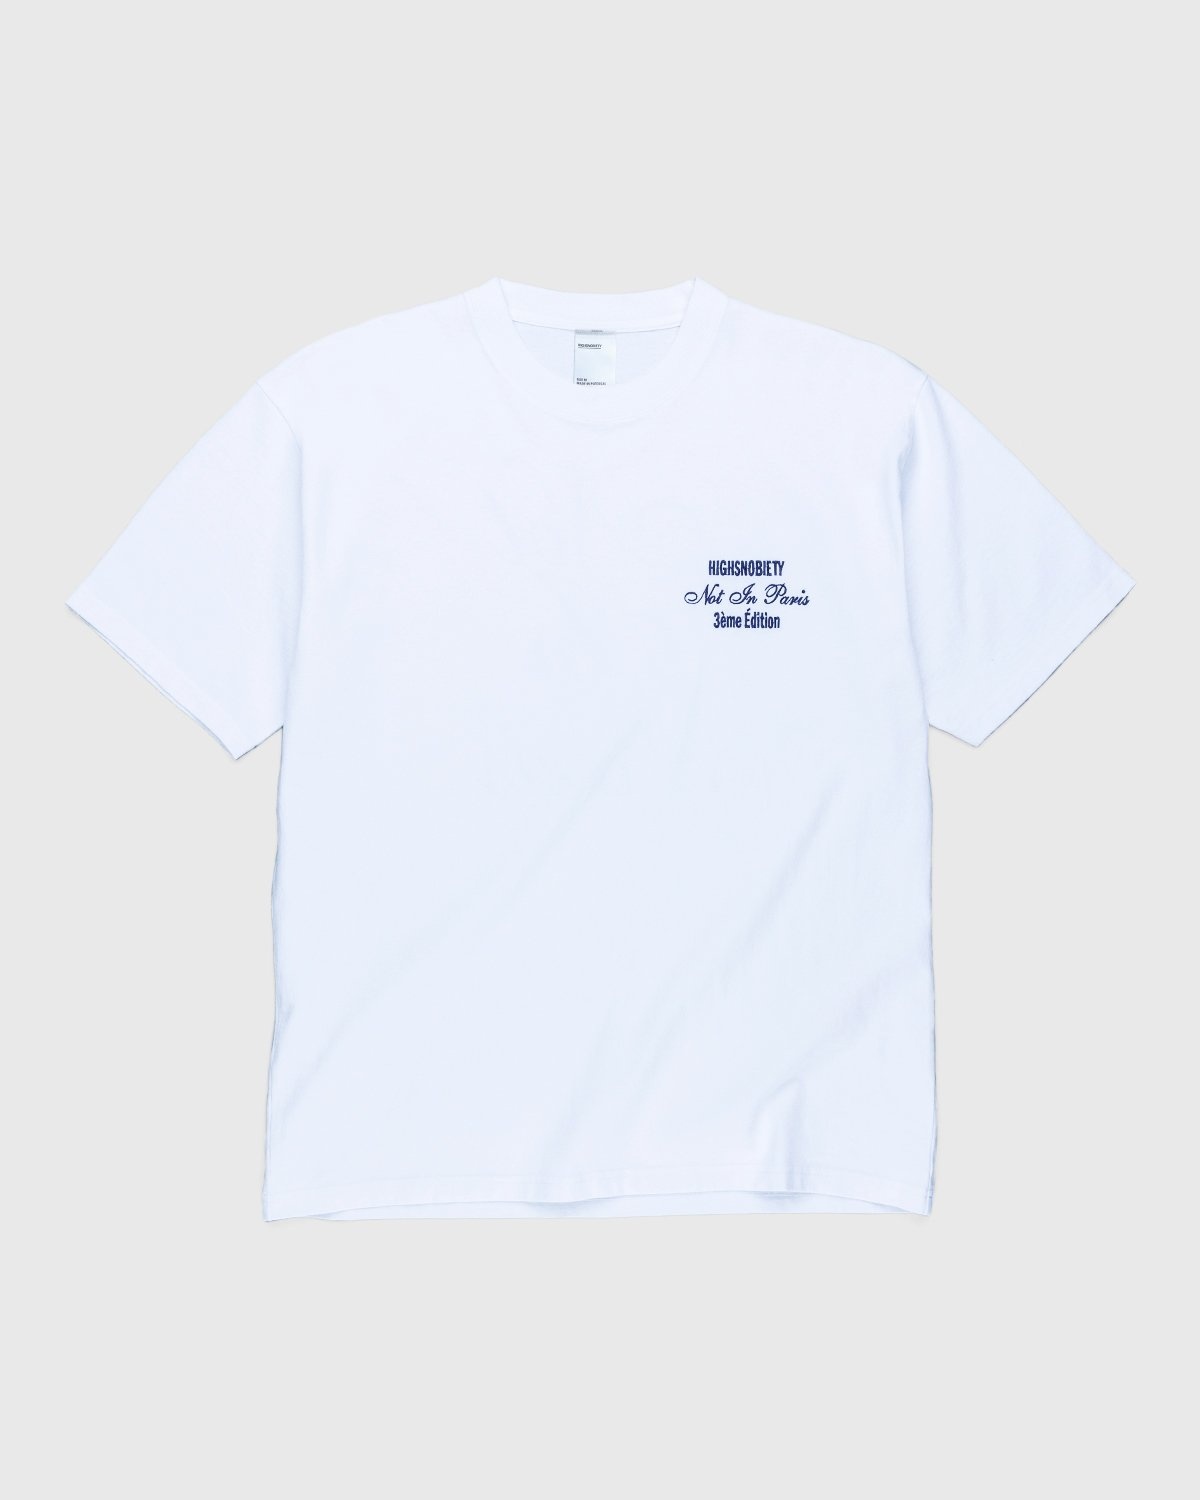 Highsnobiety – Not In Paris 3 Tour Eiffel T-Shirt White - T-Shirts - White - Image 2